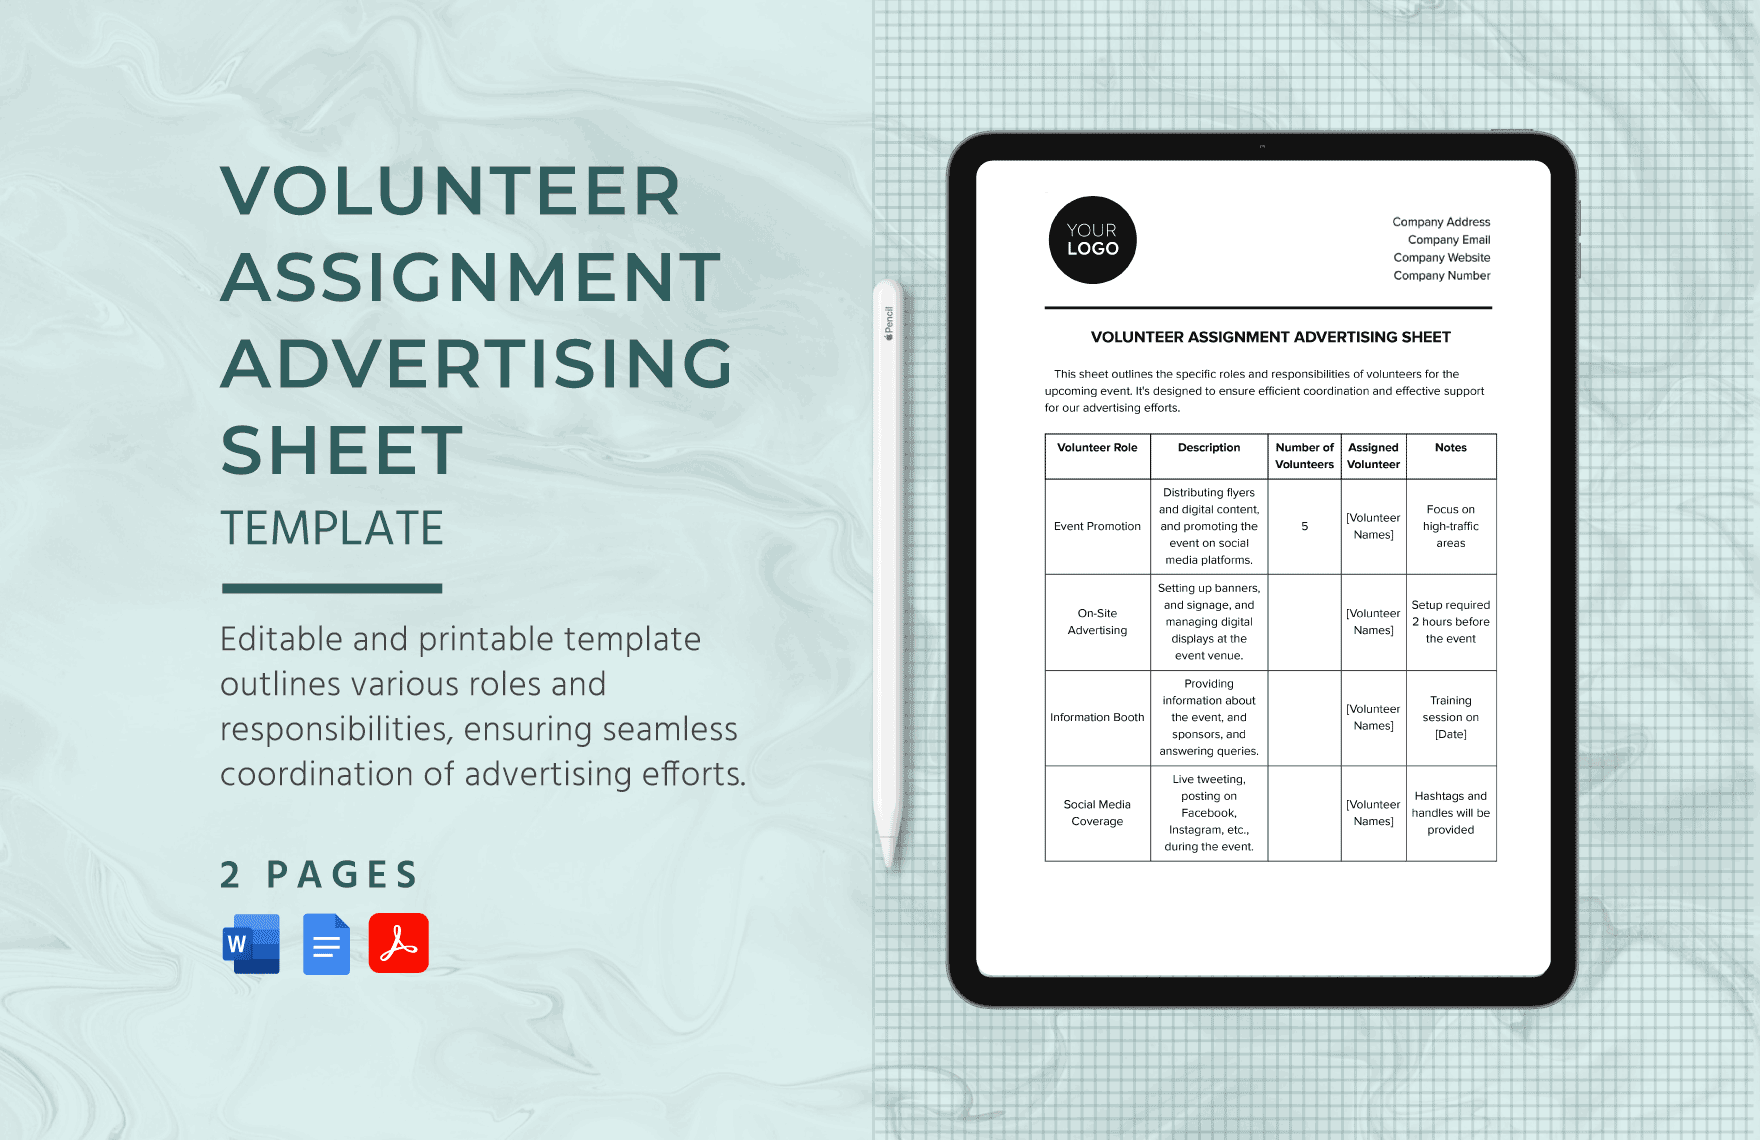 Volunteer Assignment Advertising Sheet Template